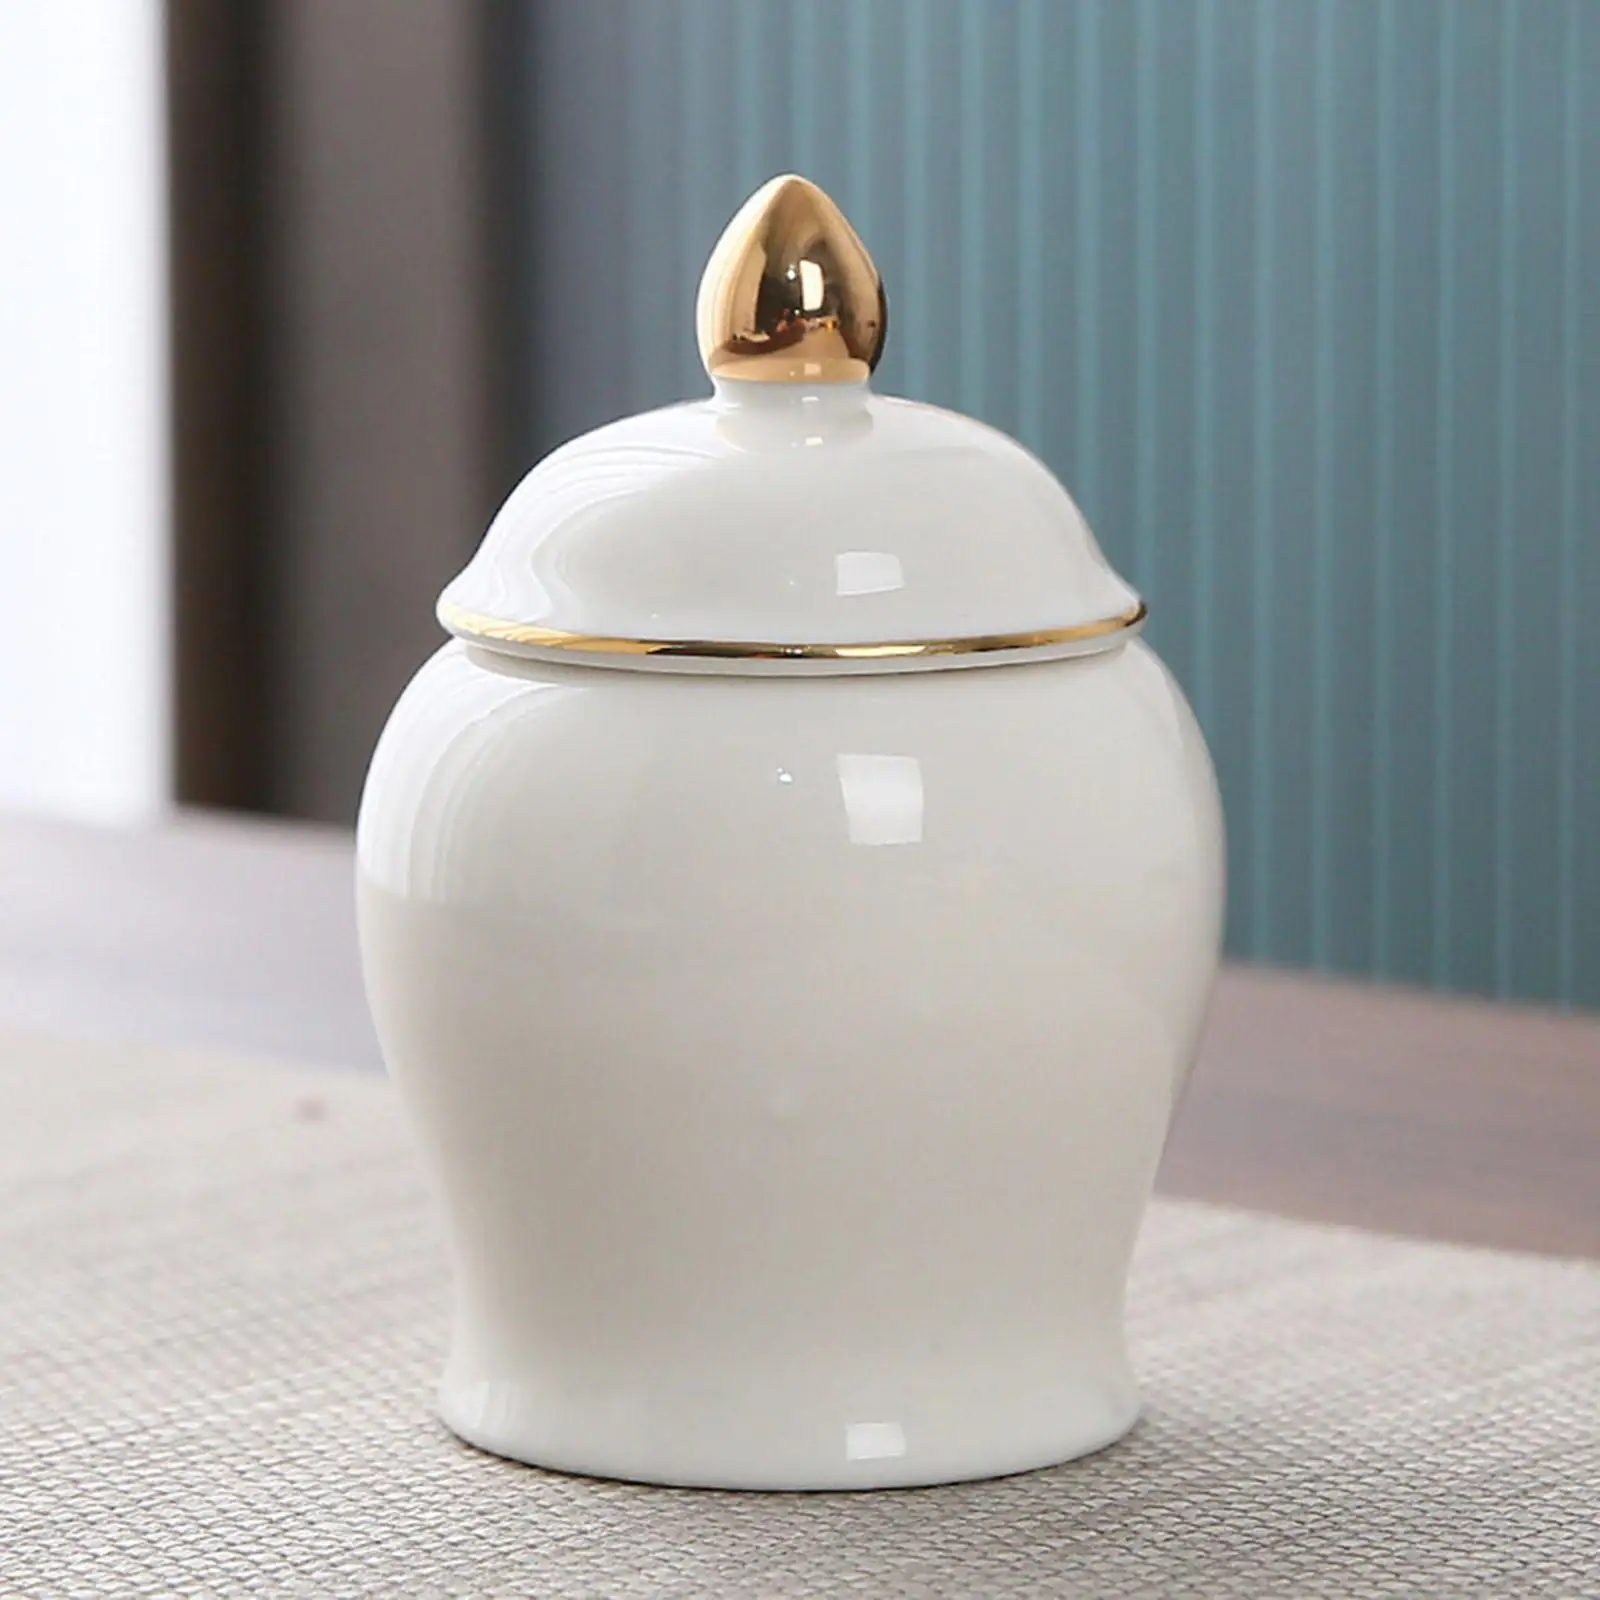 https://ae01.alicdn.com/kf/S24ad09624a54401bbf4f39c7bb0c82929/Kitchen-Canisters-Decorative-Jars-Portable-Ceramic-Food-Storage-Jar-for-Salt.jpg